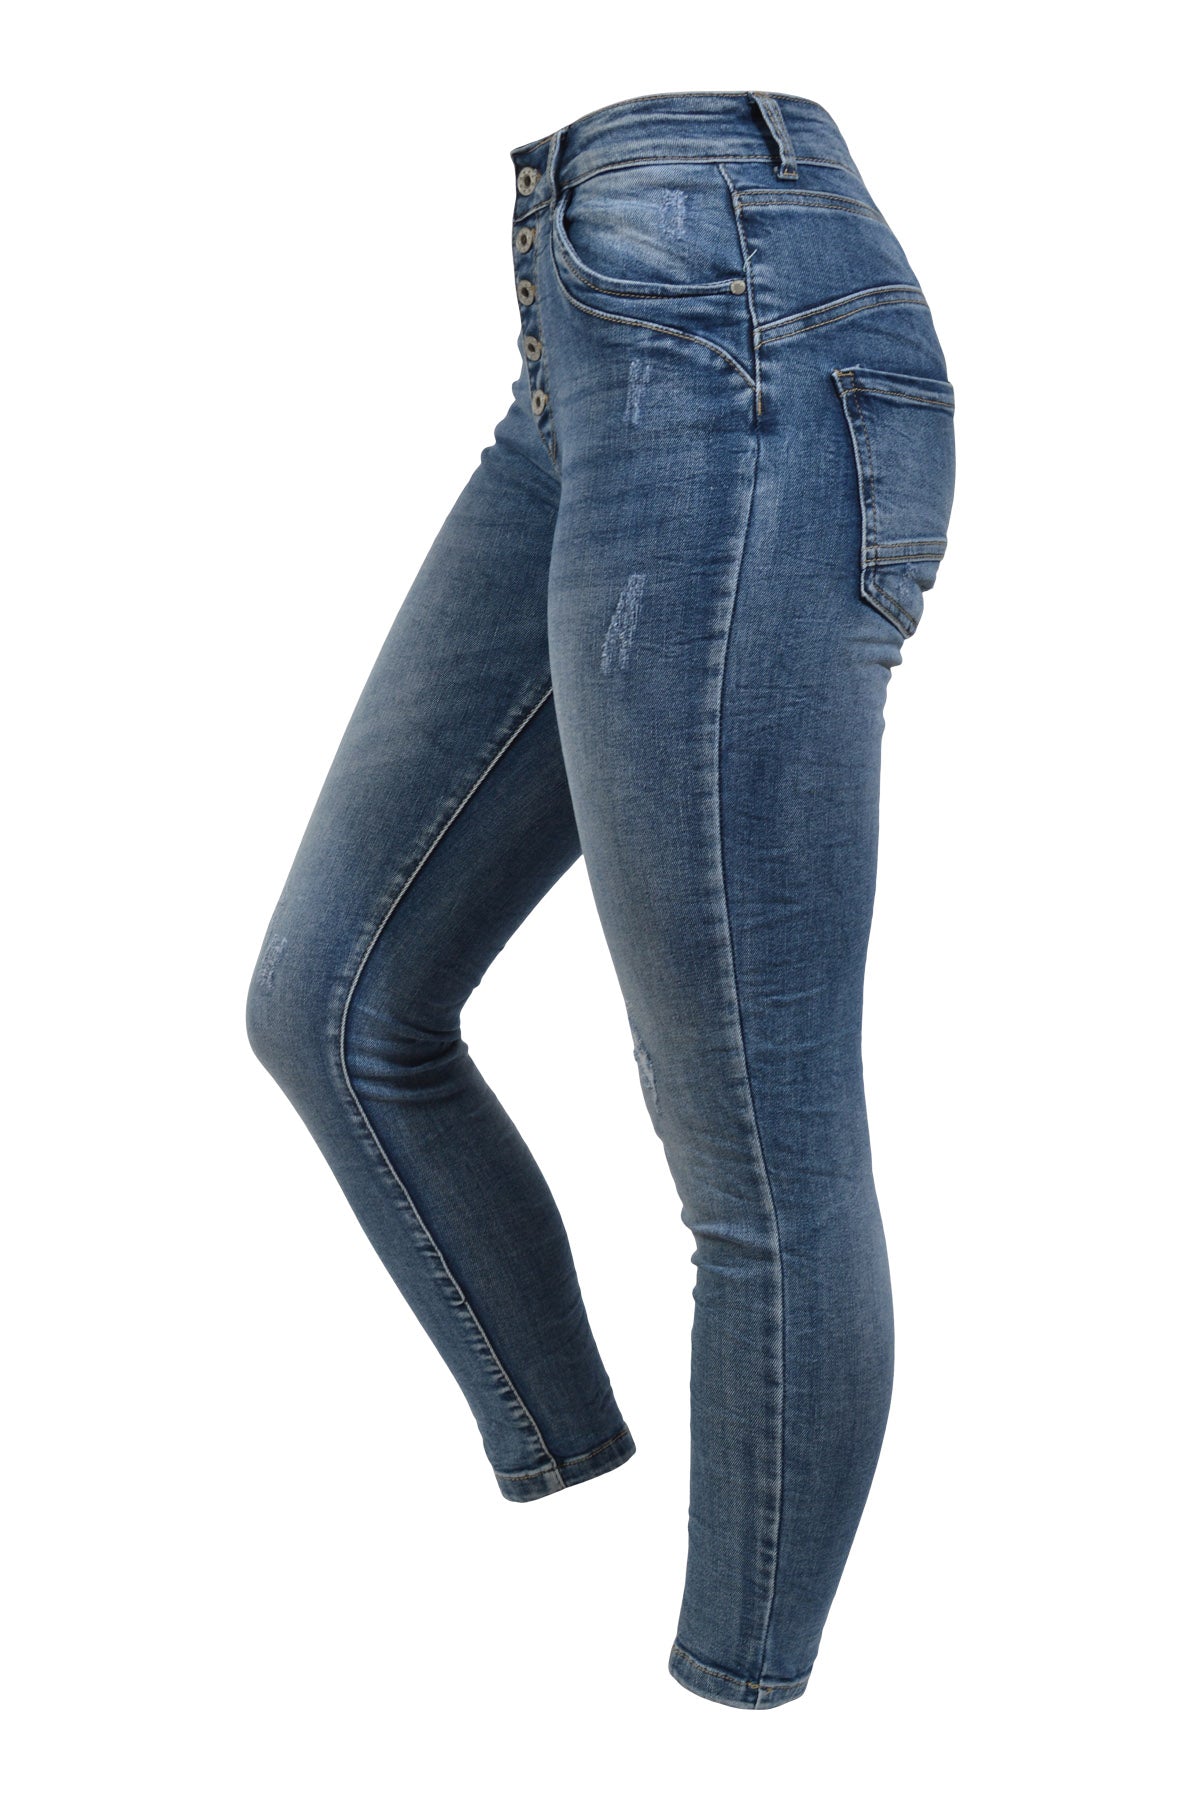 Piro jeans PB536, Jeans